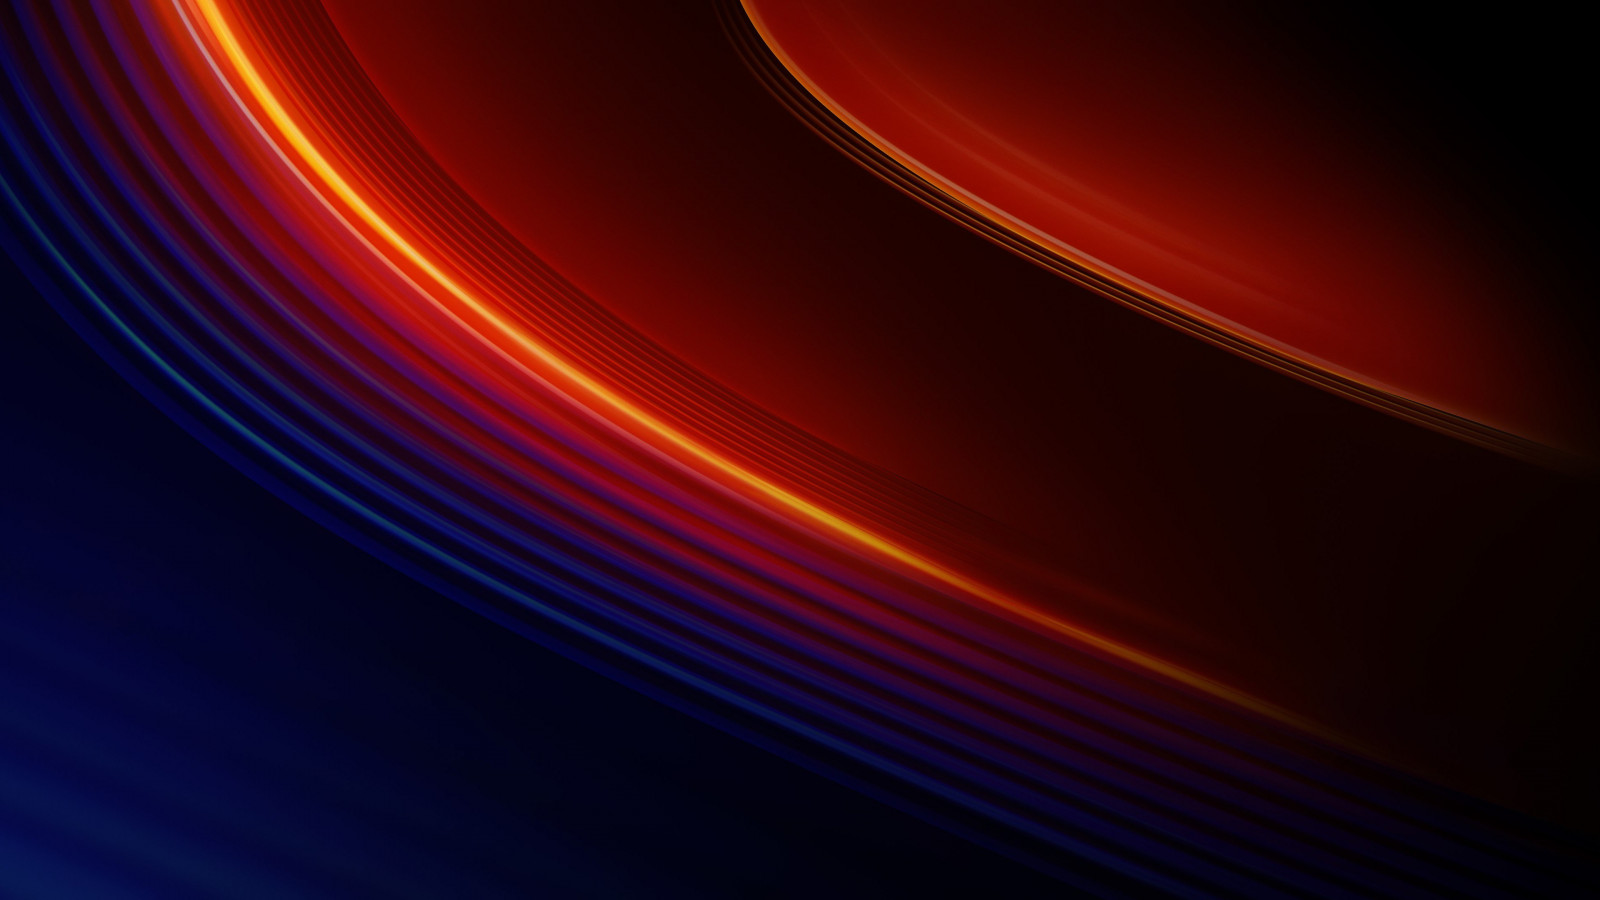 Download wallpaper: OnePlus 7T Pro warm lines 1600x900